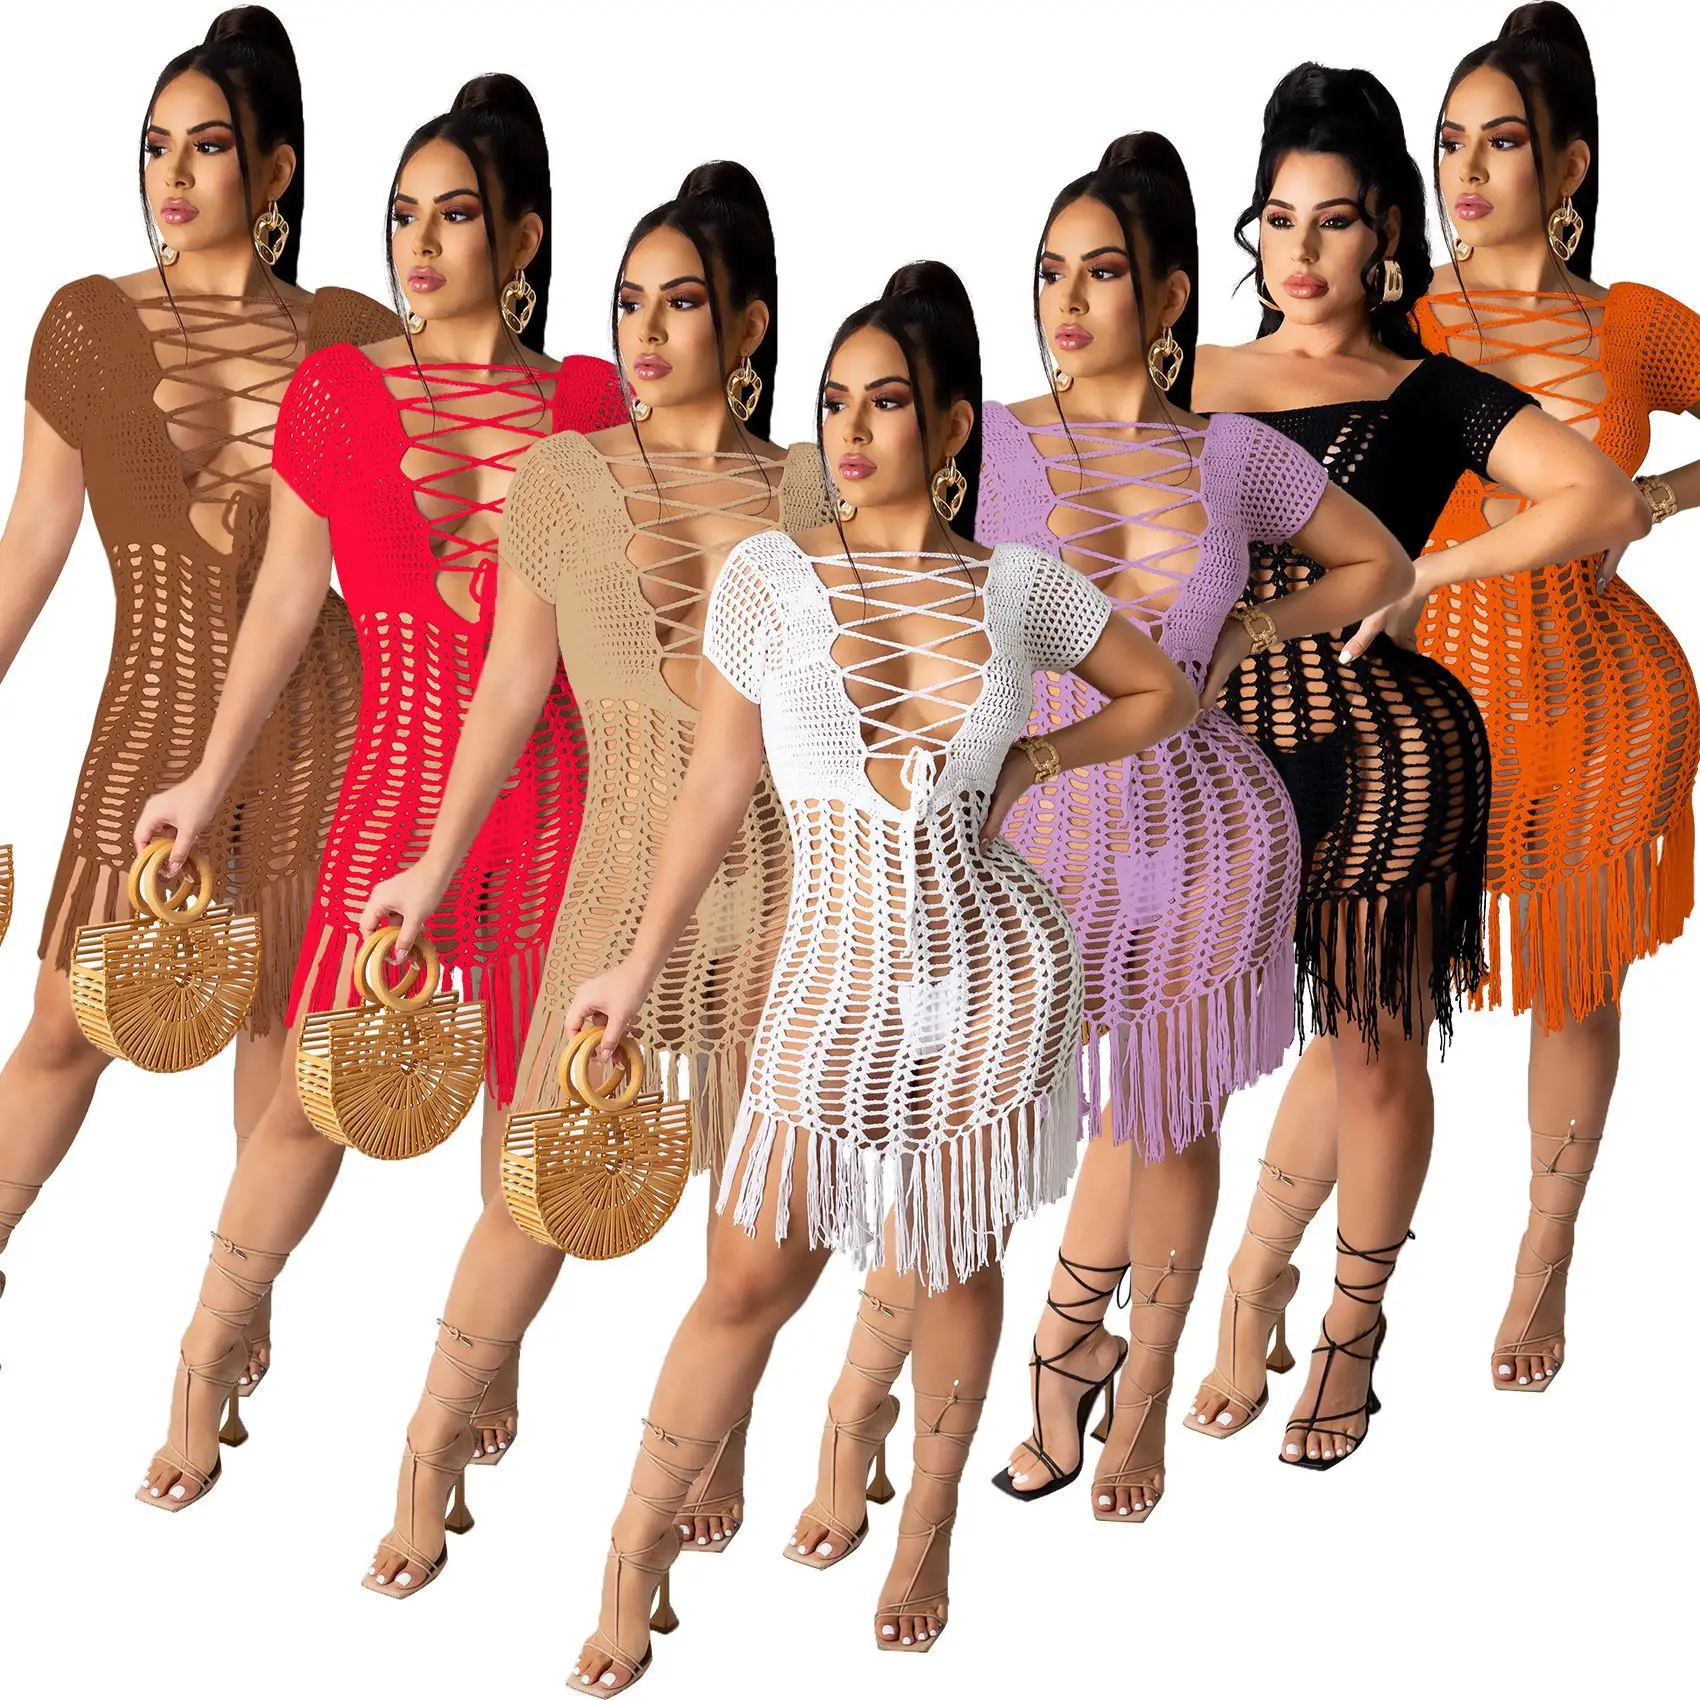 

2022 Swim Clothes Woman Beach Dress Crochet Beachwear Cover Up With Fringe Colorful Sexy Hollow Out Women Knitted Crochet Dress, White/khaki/purple/black/orange/coffee/red crochet dress